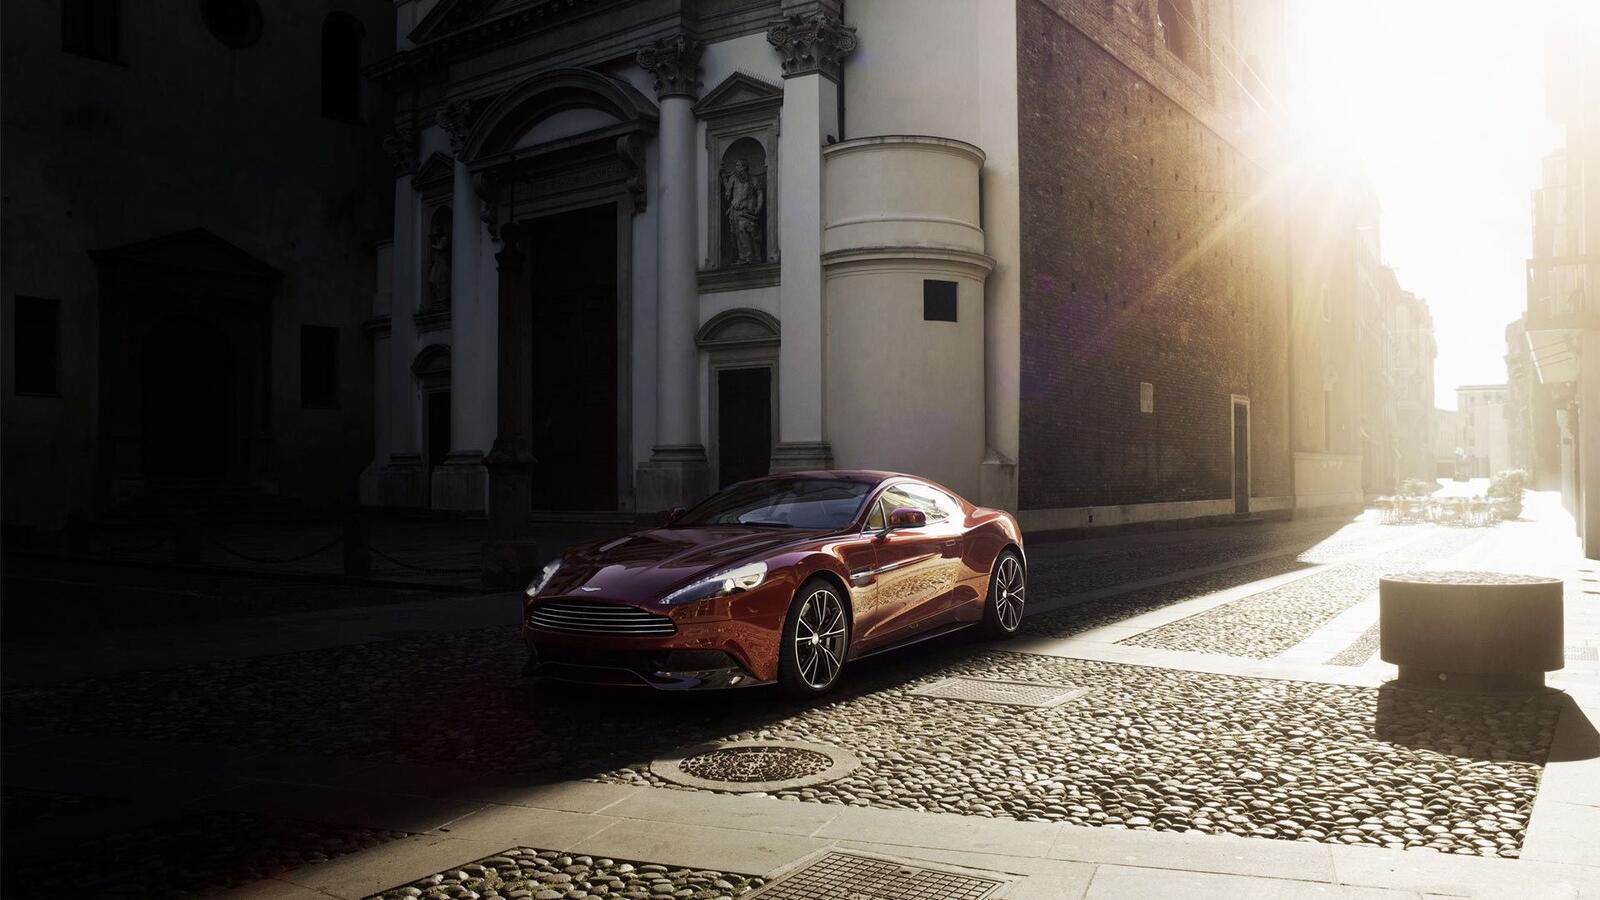 Free photo The Aston Martin Vanquish drives down a sunny street.